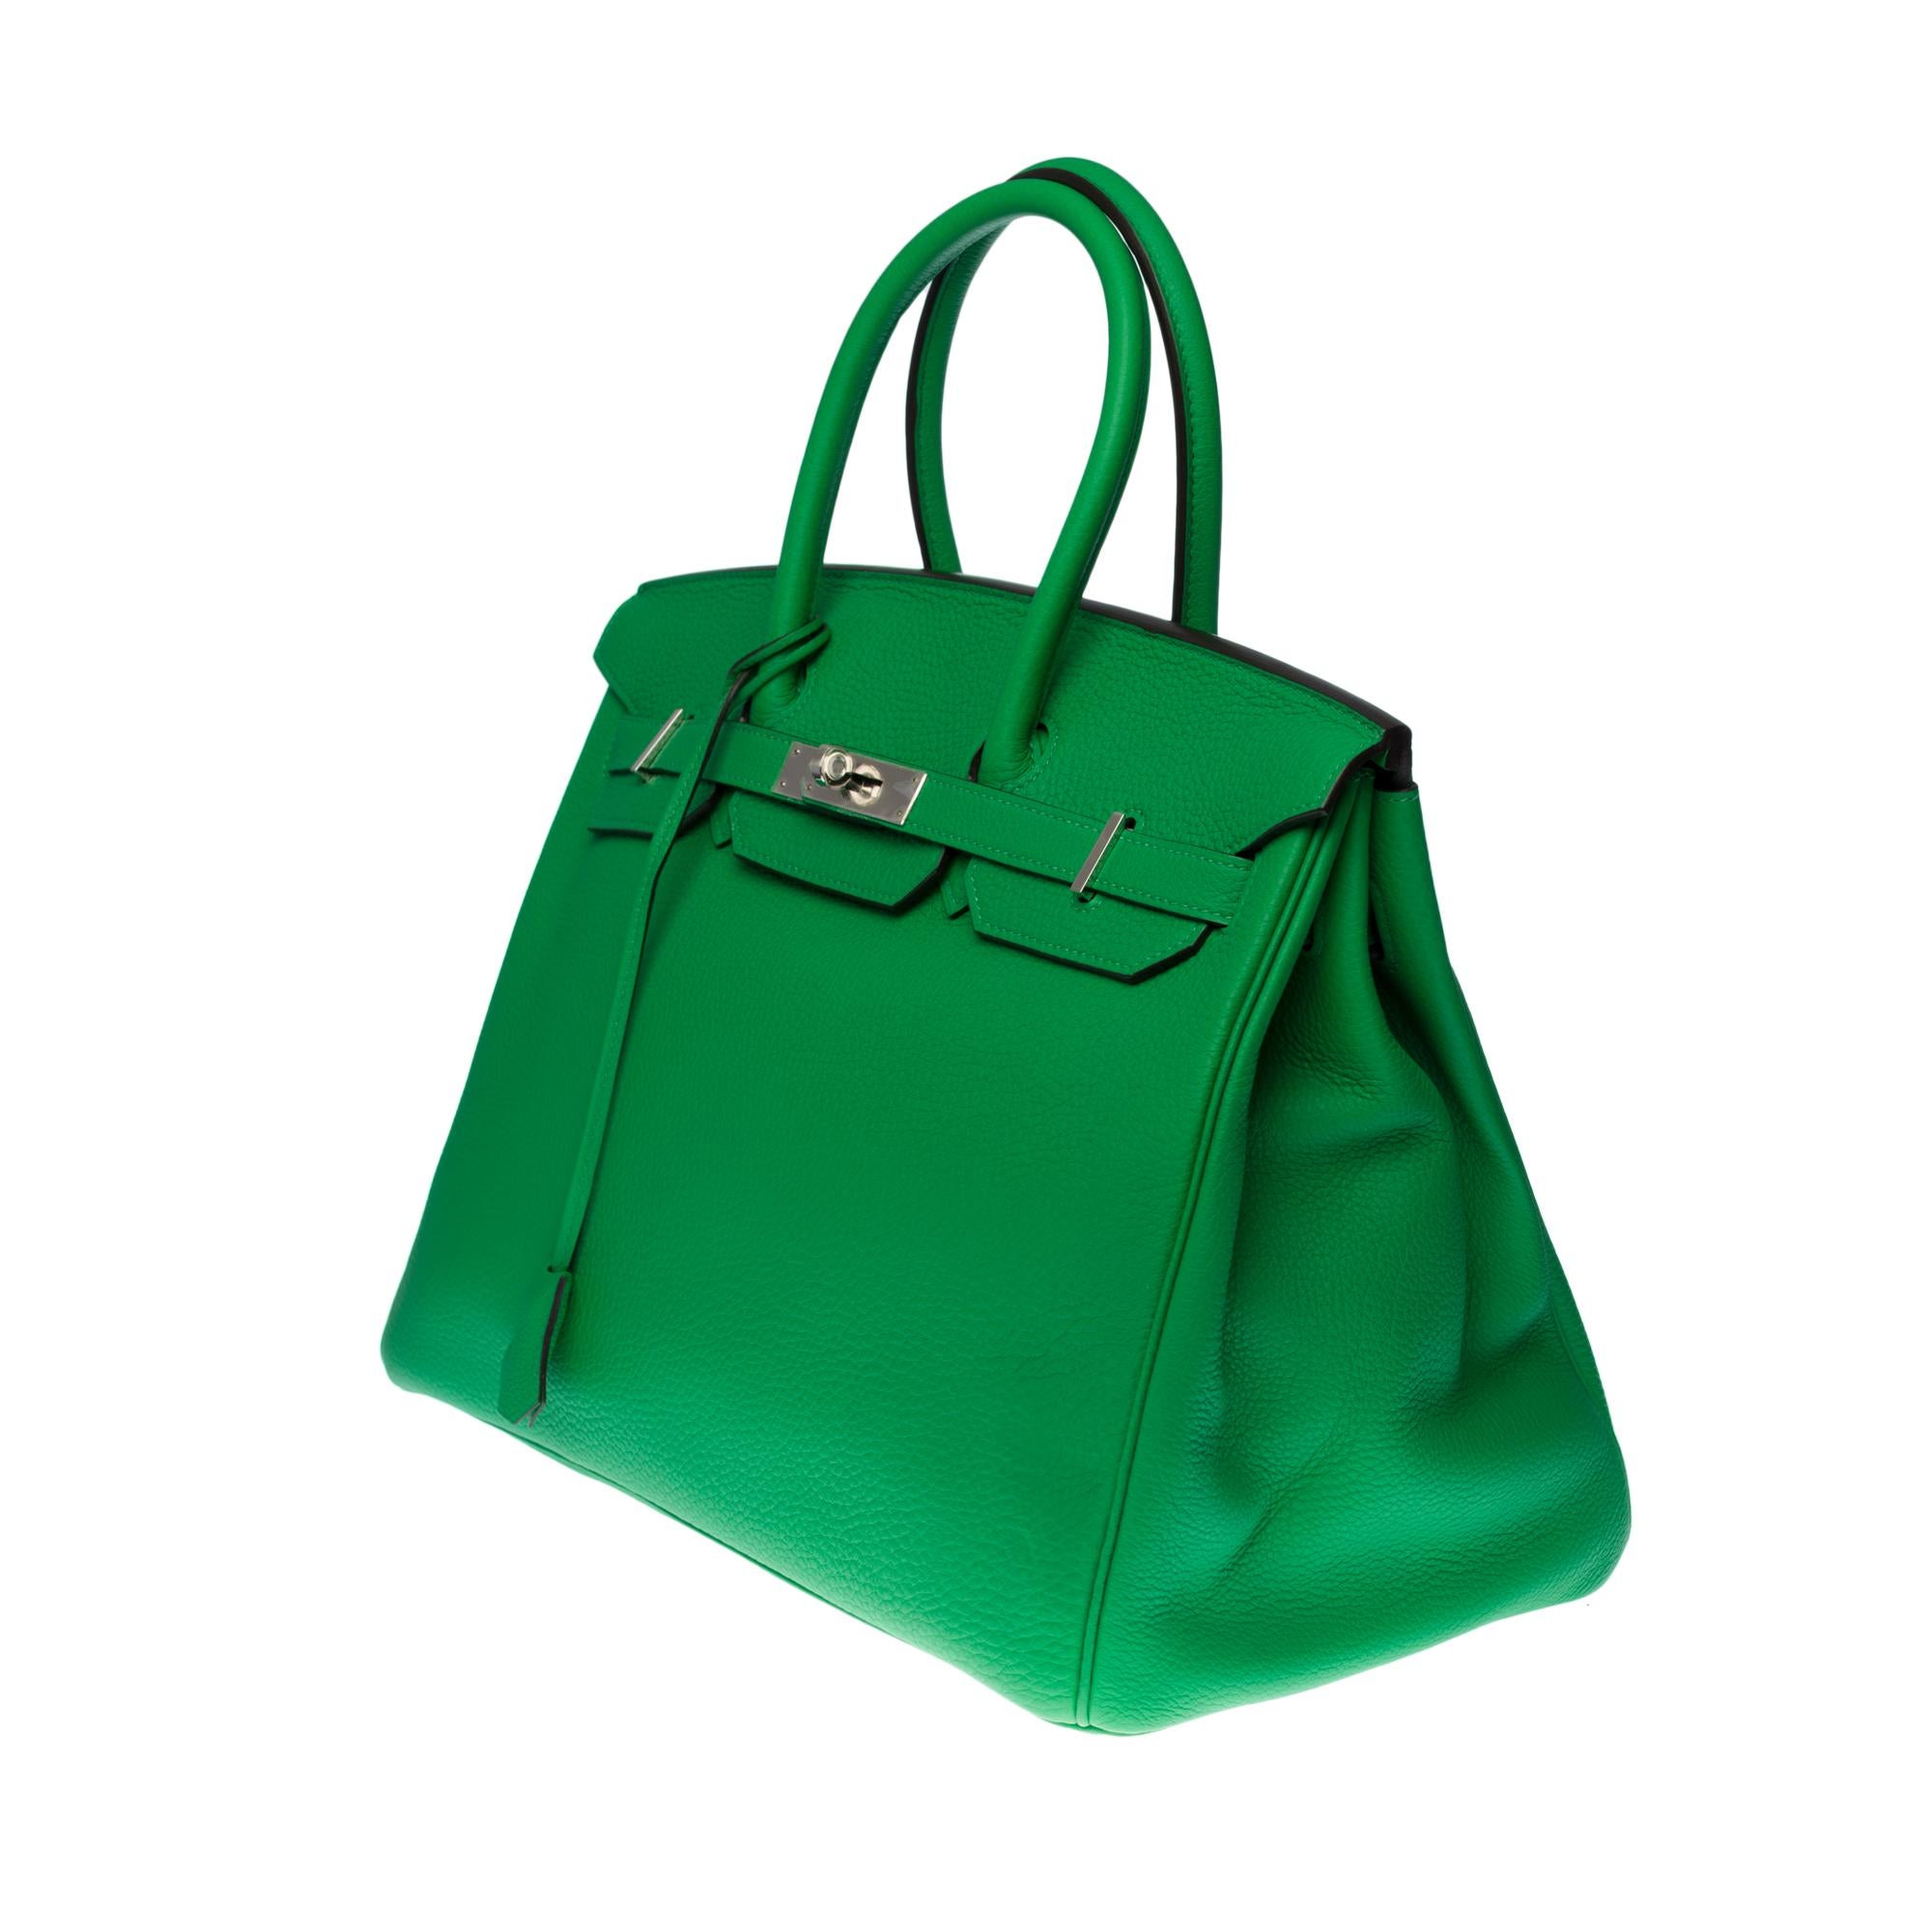 Green New Condition Hermès Birkin 35 handbag in Vert Bamboo Togo leather, SHW